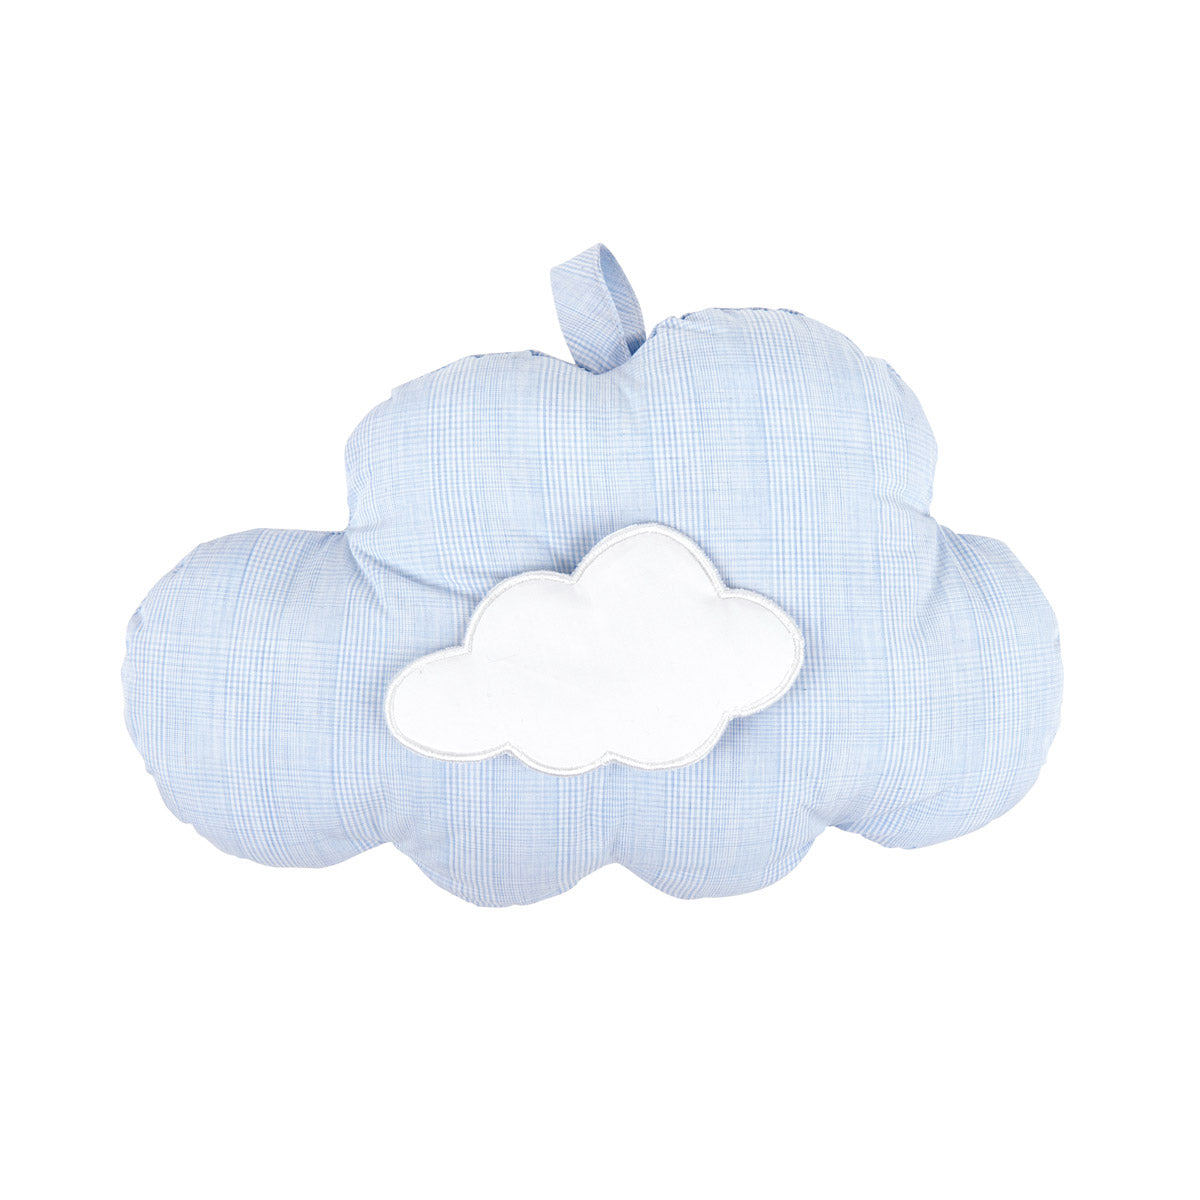 Theophile & Patachou Musical Cushion “Cloud” - Sweet Blue